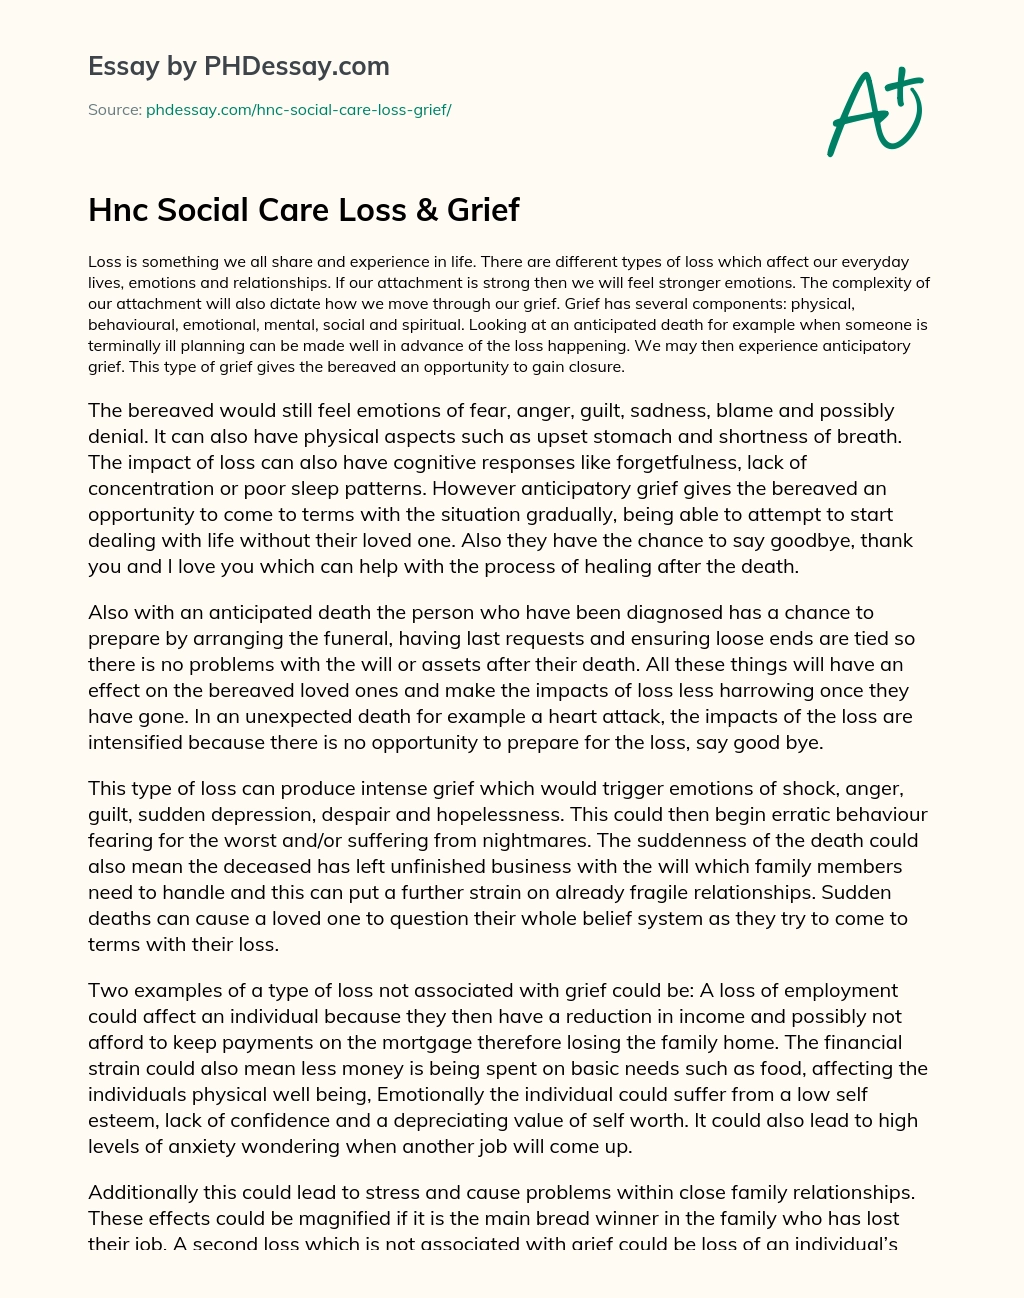 Hnc Social Care Loss & Grief essay